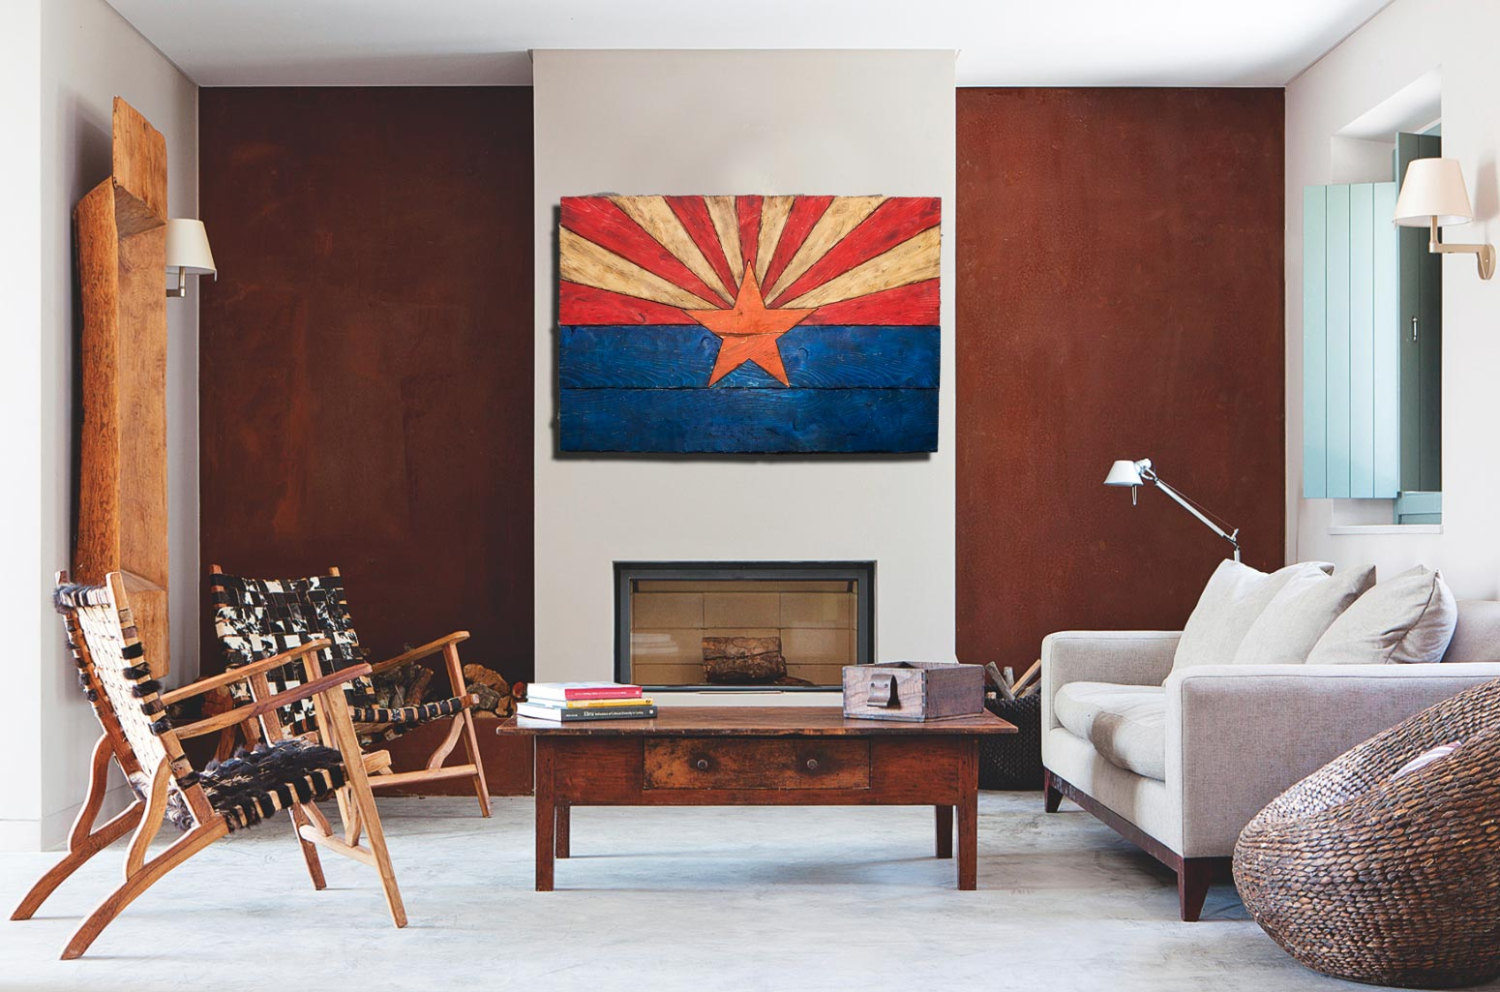 Arizona Flag, Handmade, distressed painted Wood, vintage, art, distressed, weathered, AZ, Arizona flag art, home decor, Wall art, blue